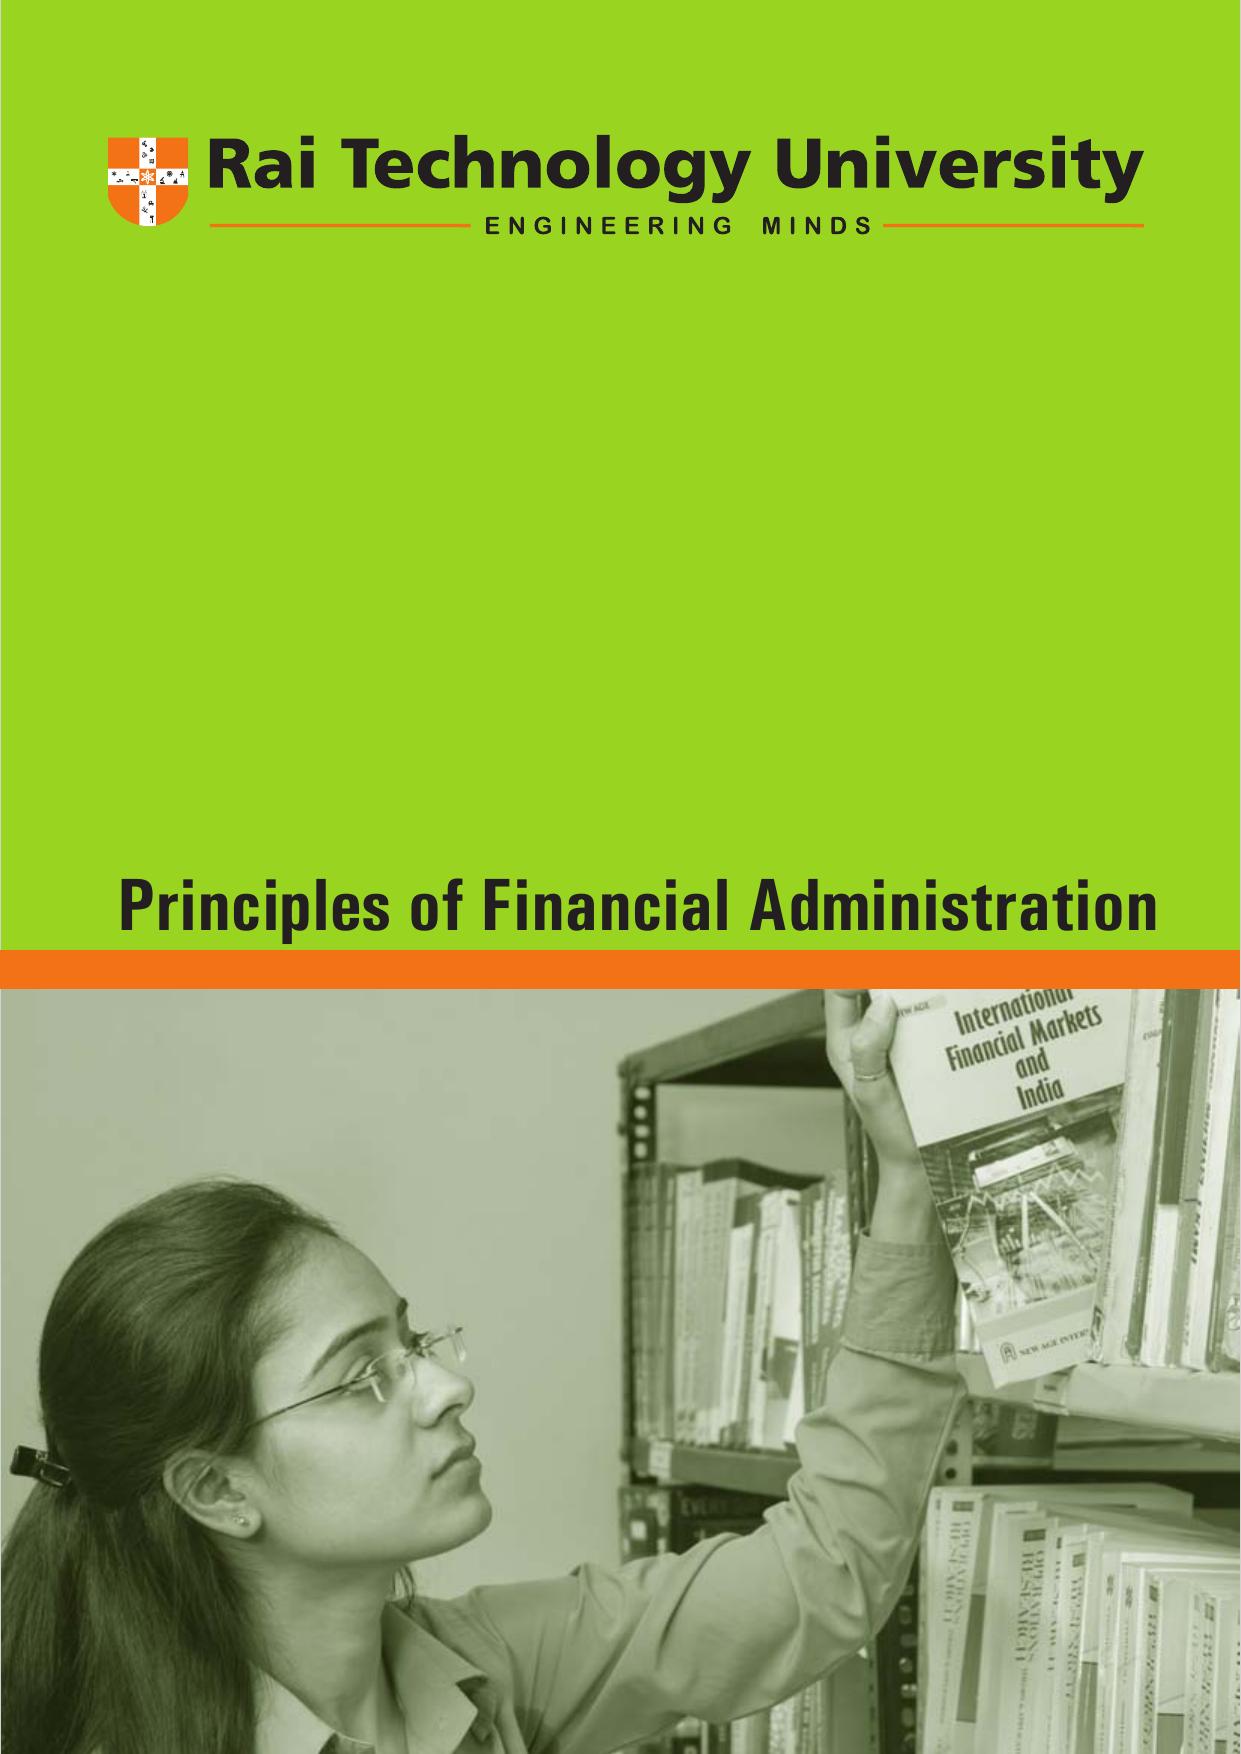 Financial Administration [Rai Foundation Final]